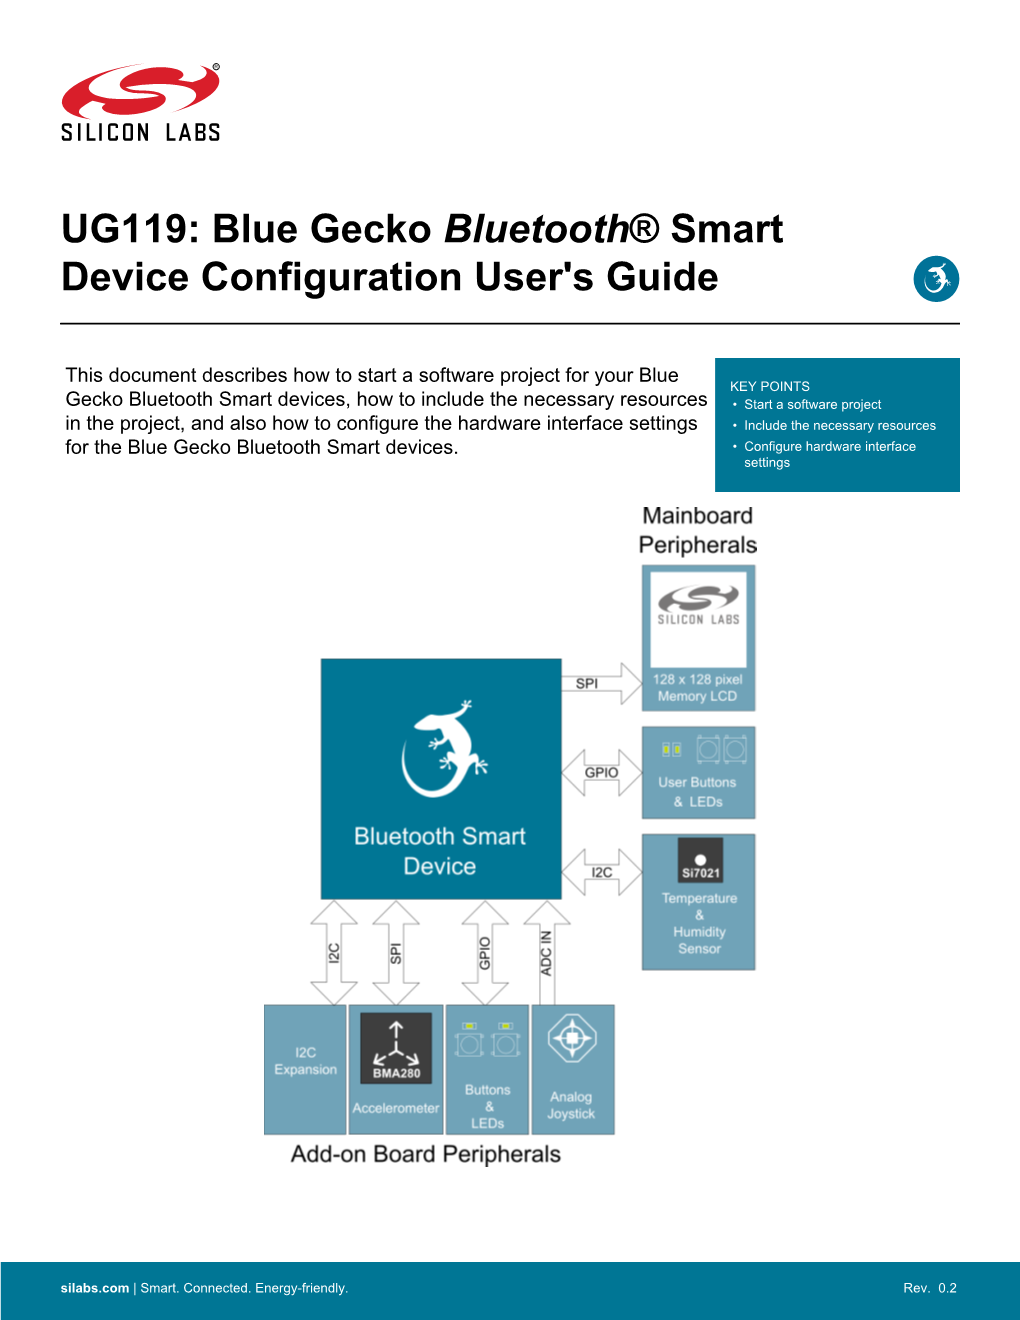 Blue Gecko Bluetooth Smart Device Configuration User's Guide -- UG119